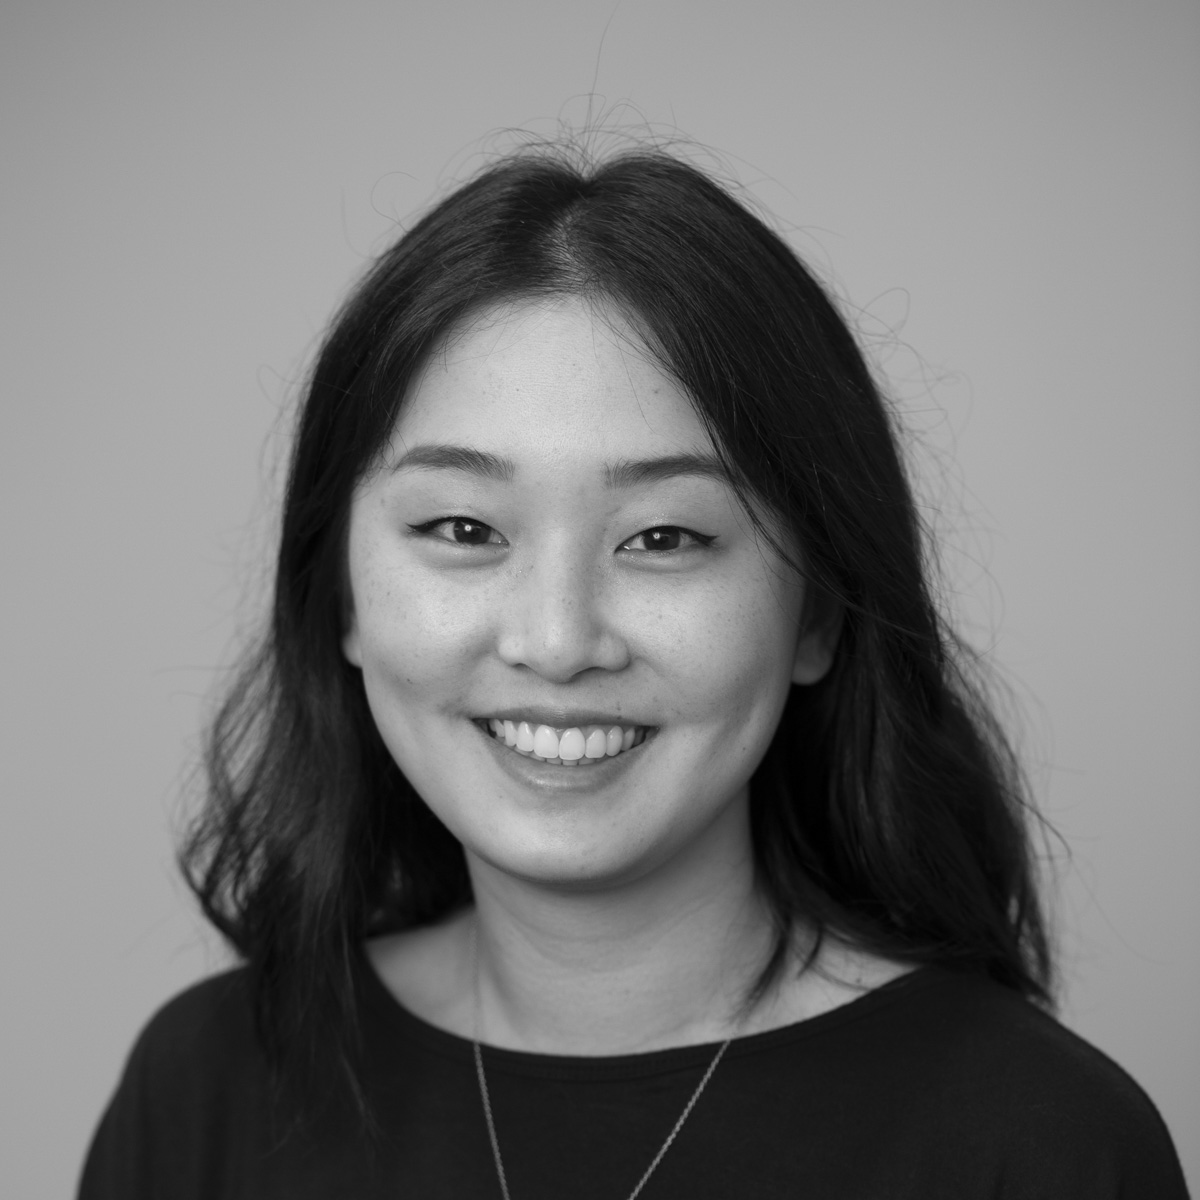 Kristina Kang | Root, a part of Accenture